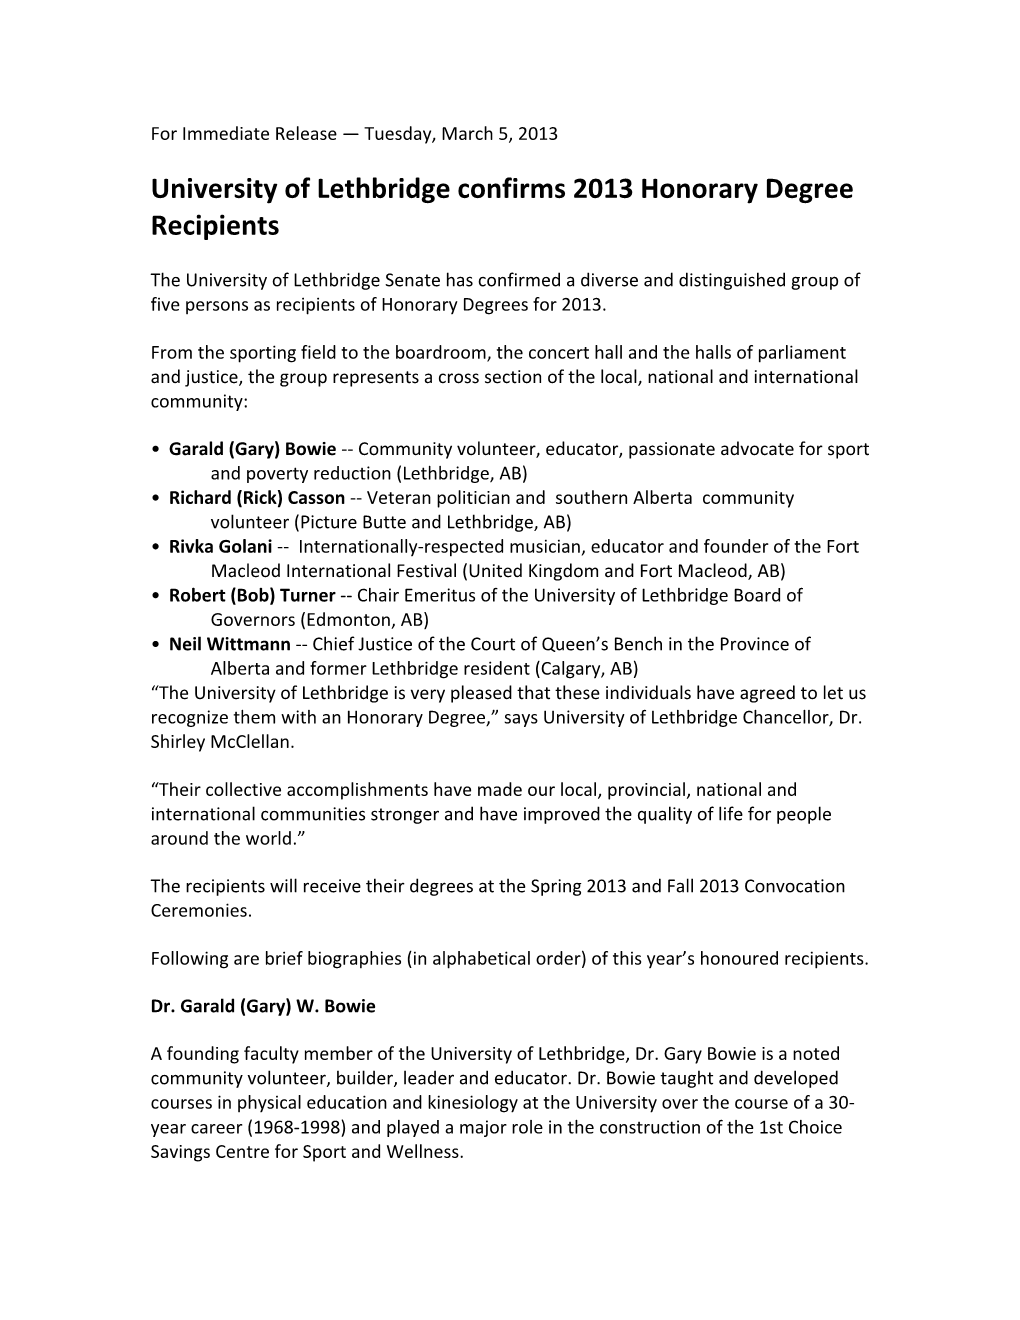 University of Lethbridge Confirms 2013 Honorary Degree Recipients